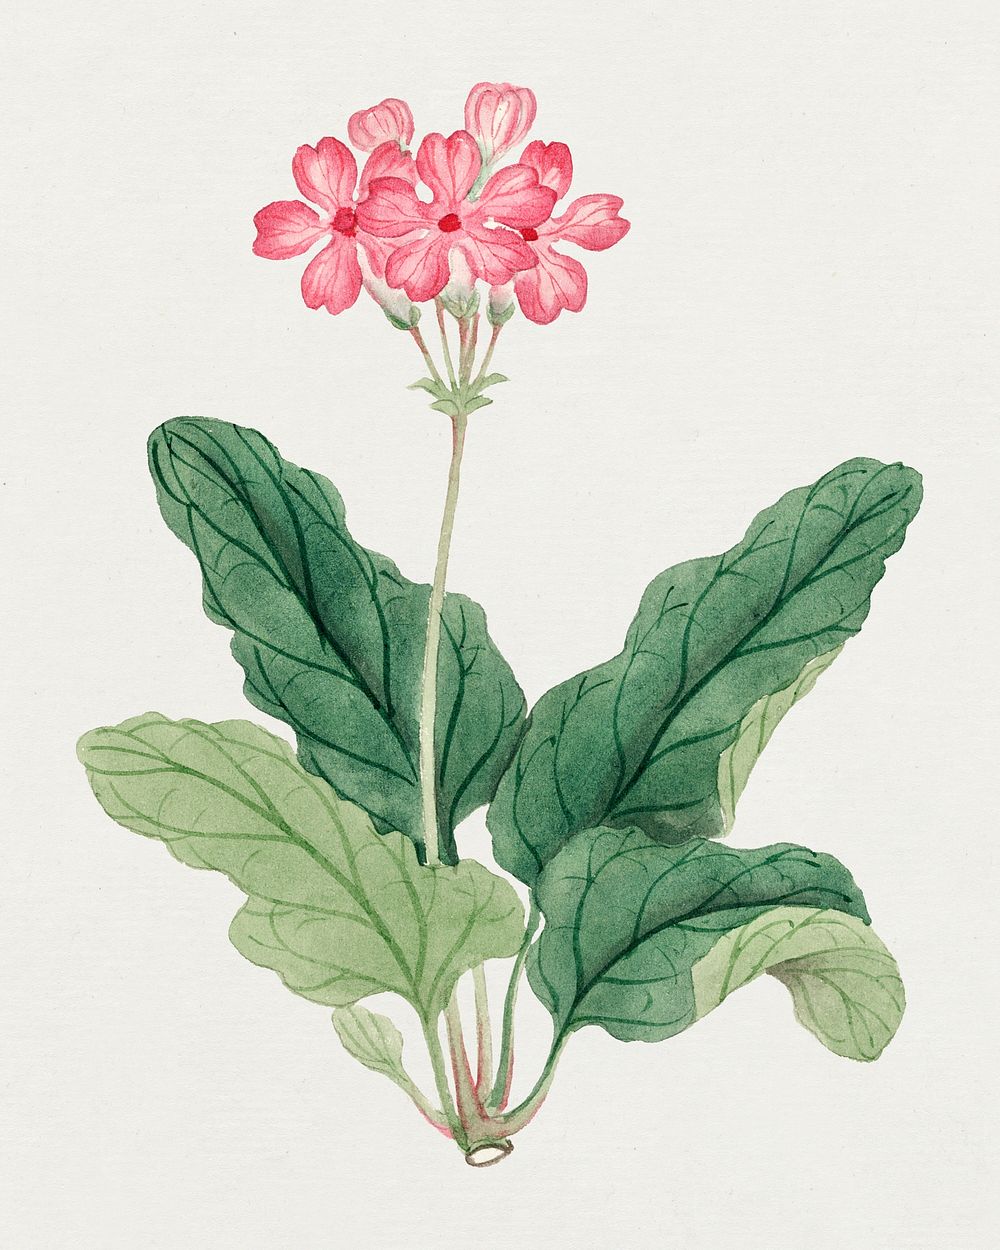 Floral psd design element Pink Geranium, vintage Japanese art remix from the David Murray collection